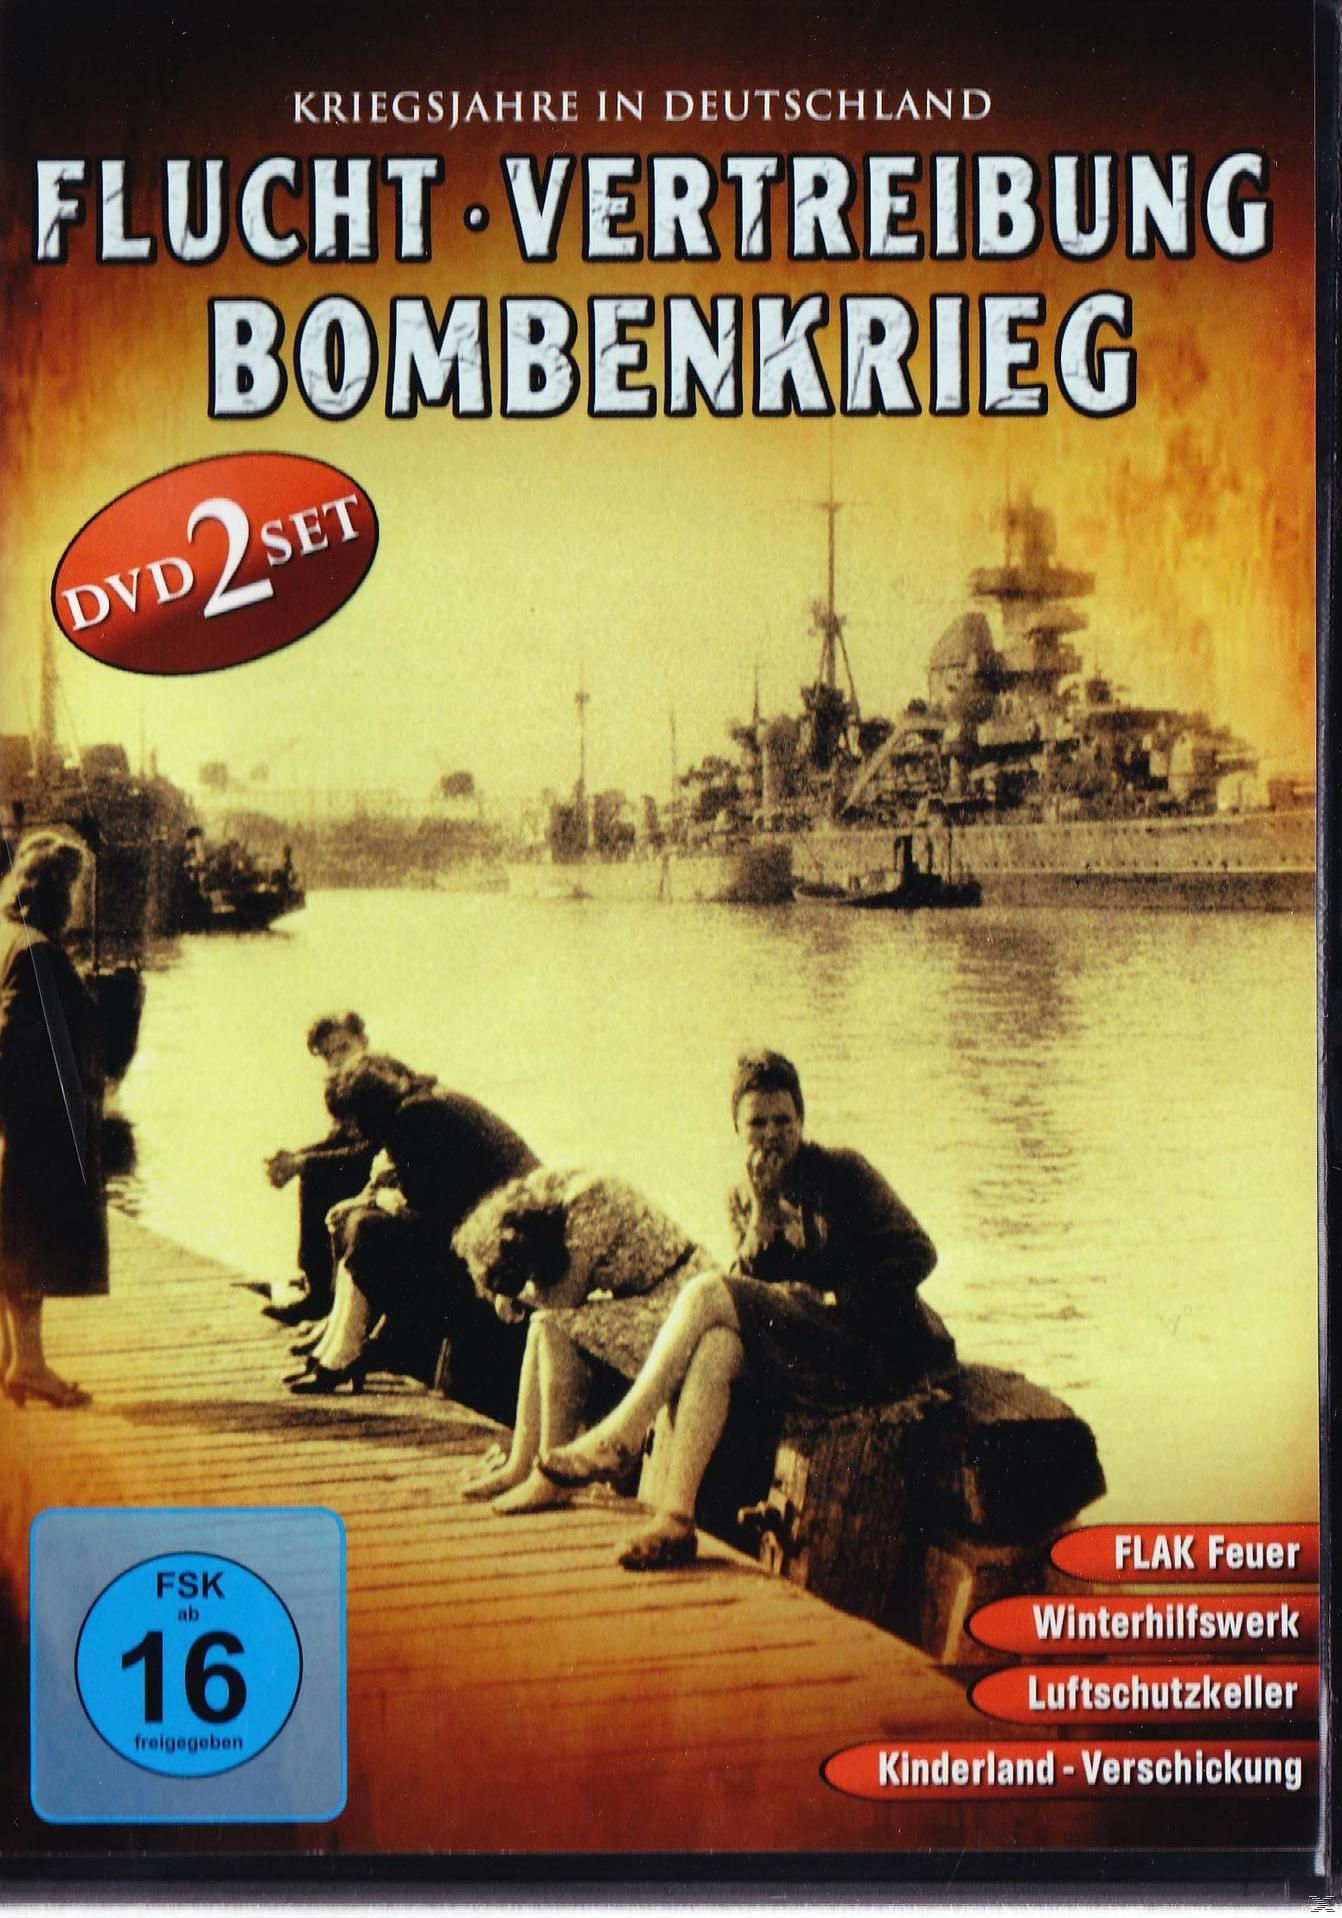 Flucht, Bombenkrieg DVD Vertreibung,